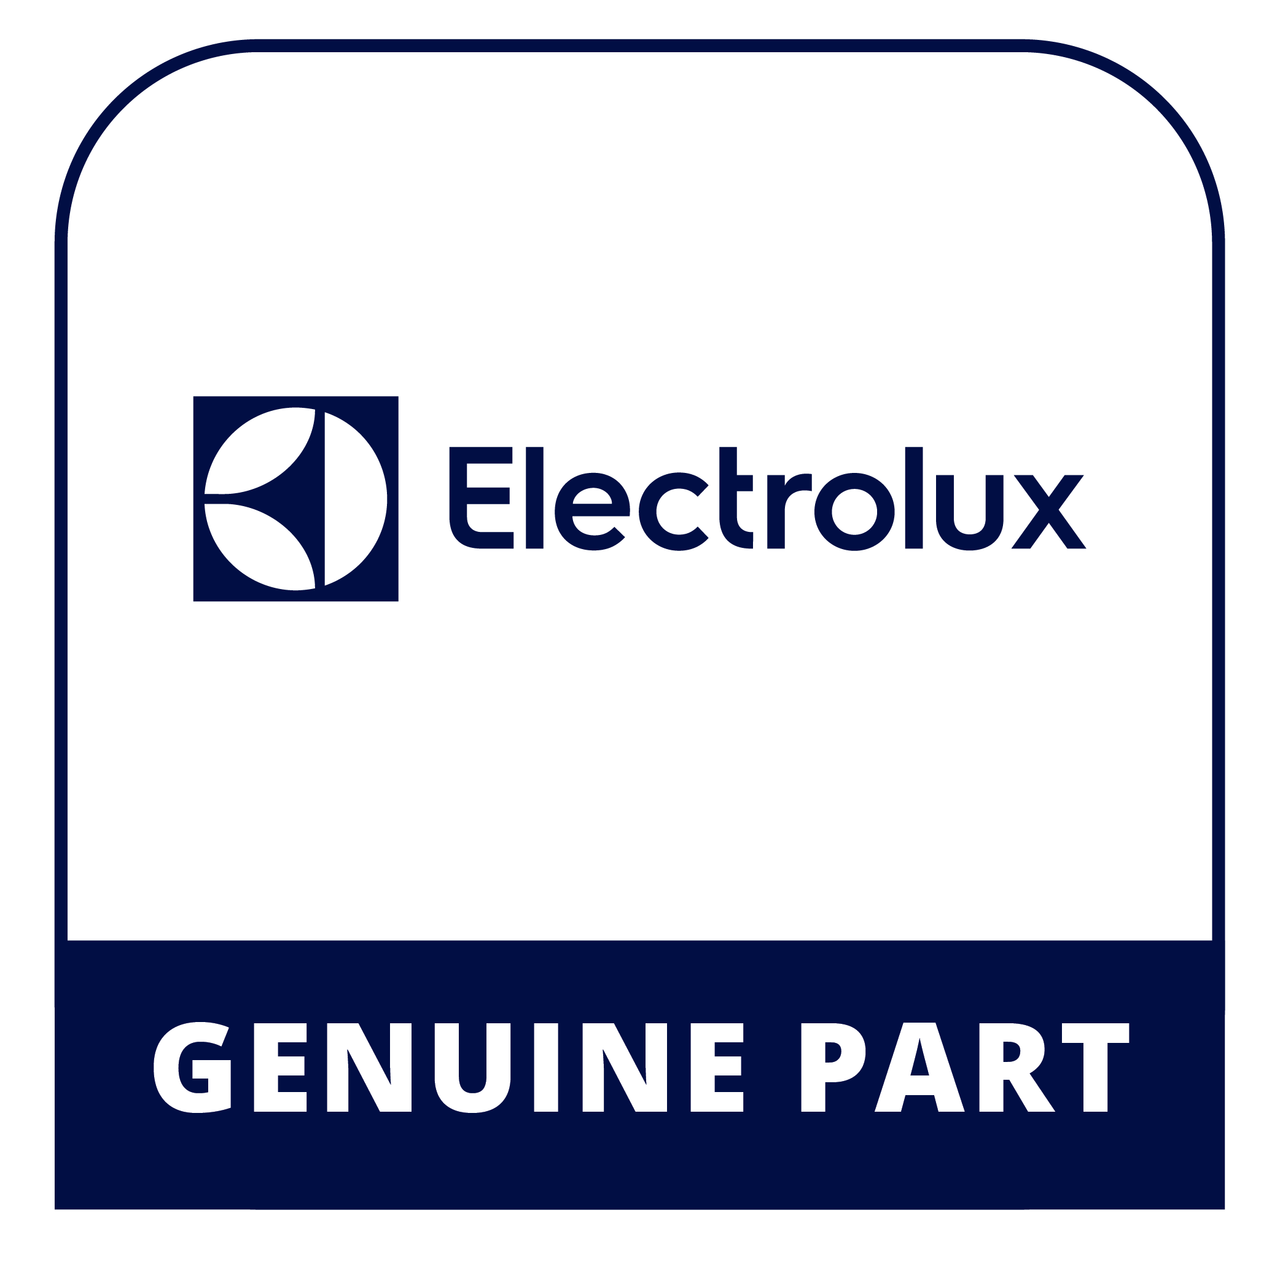 Frigidaire - Electrolux 5303918707 Control Box Kit - Genuine Electrolux Part